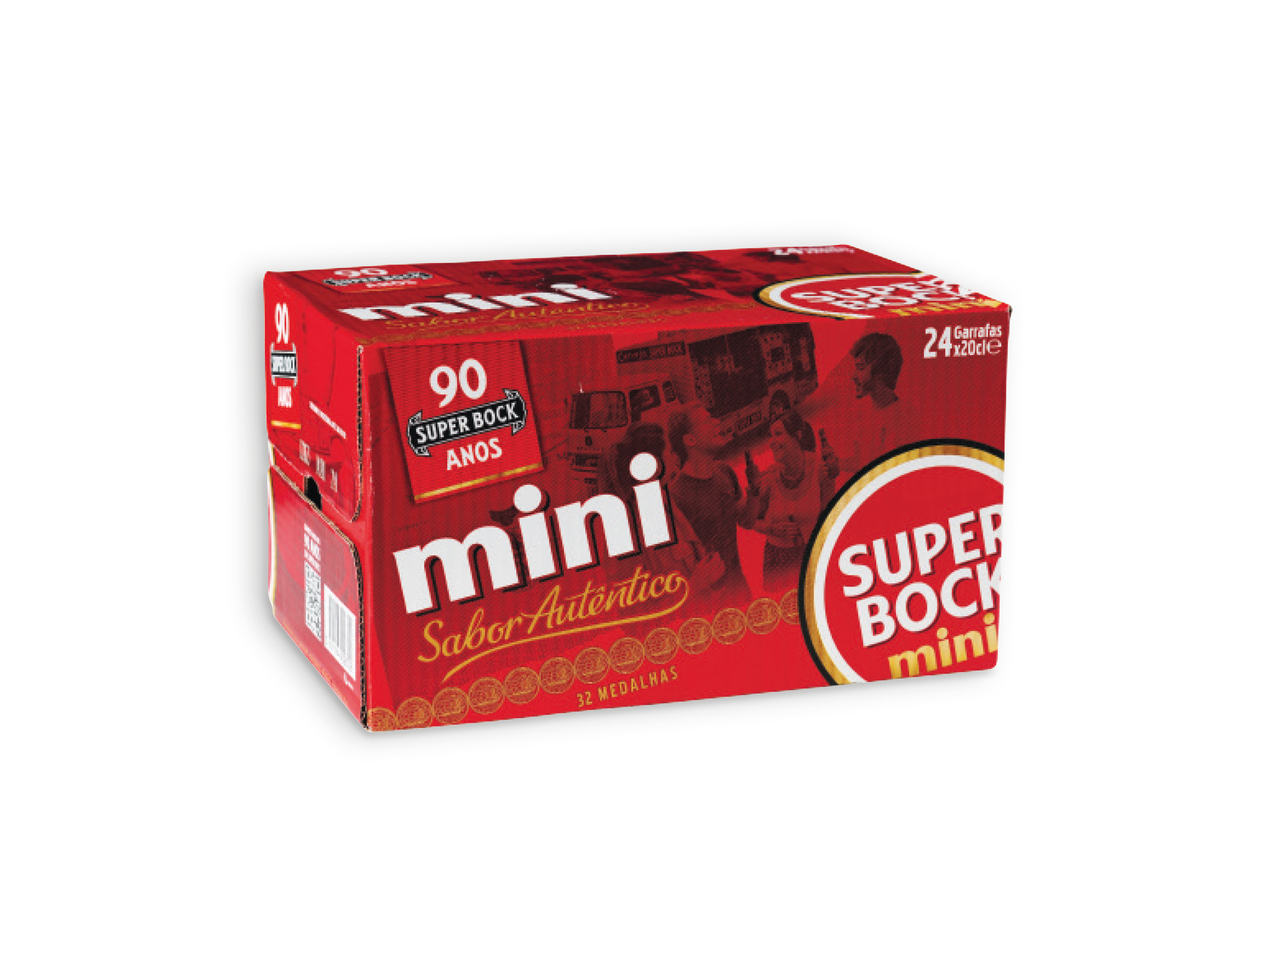 SUPER BOCK(R) Cerveja Mini Pack Económico